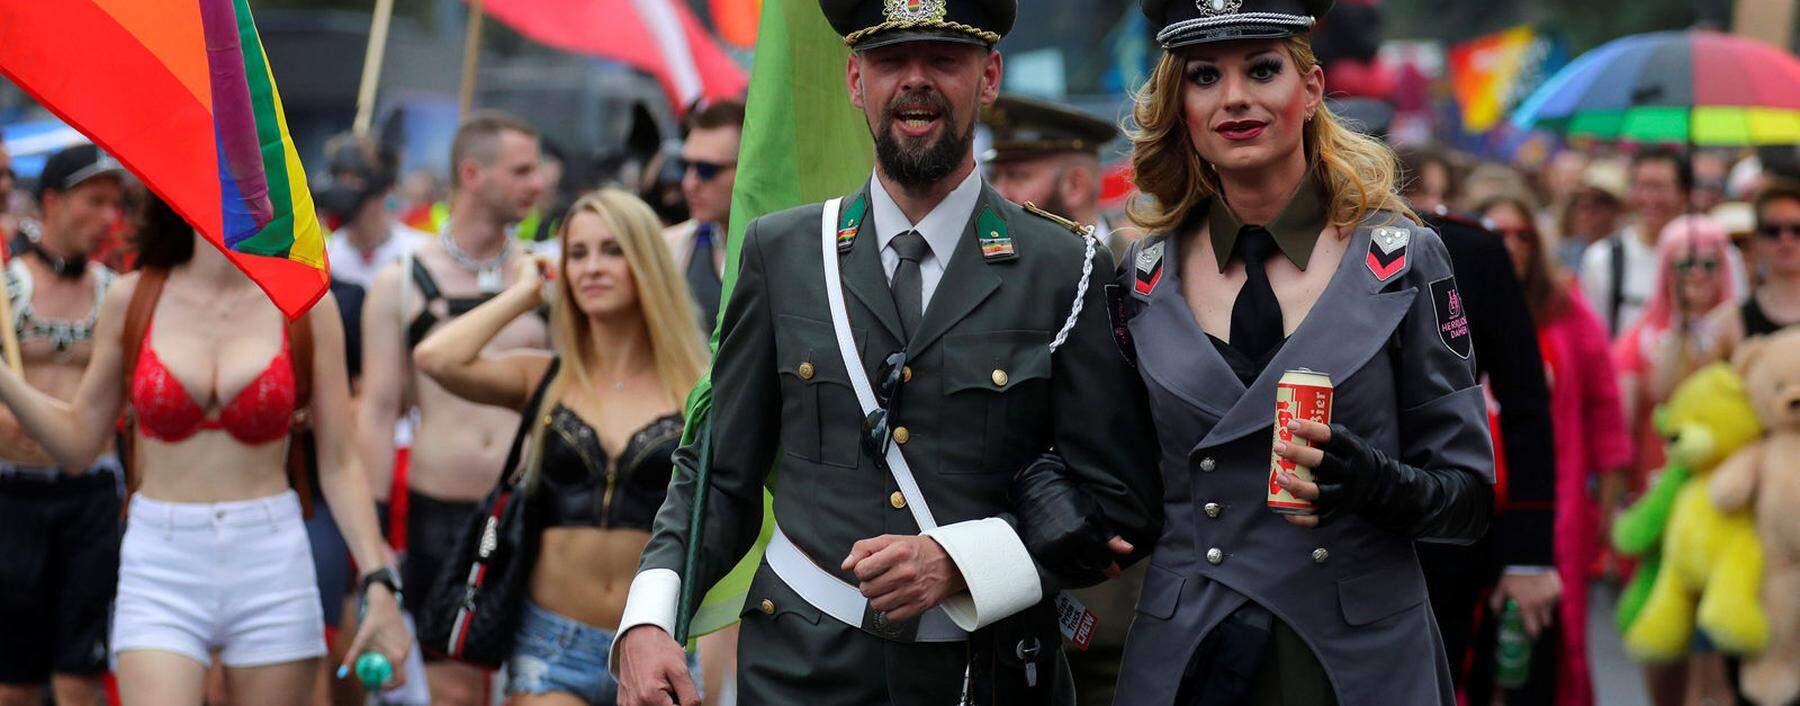 Revellers participate in Regenbogenparade gay pride parade in Vienna